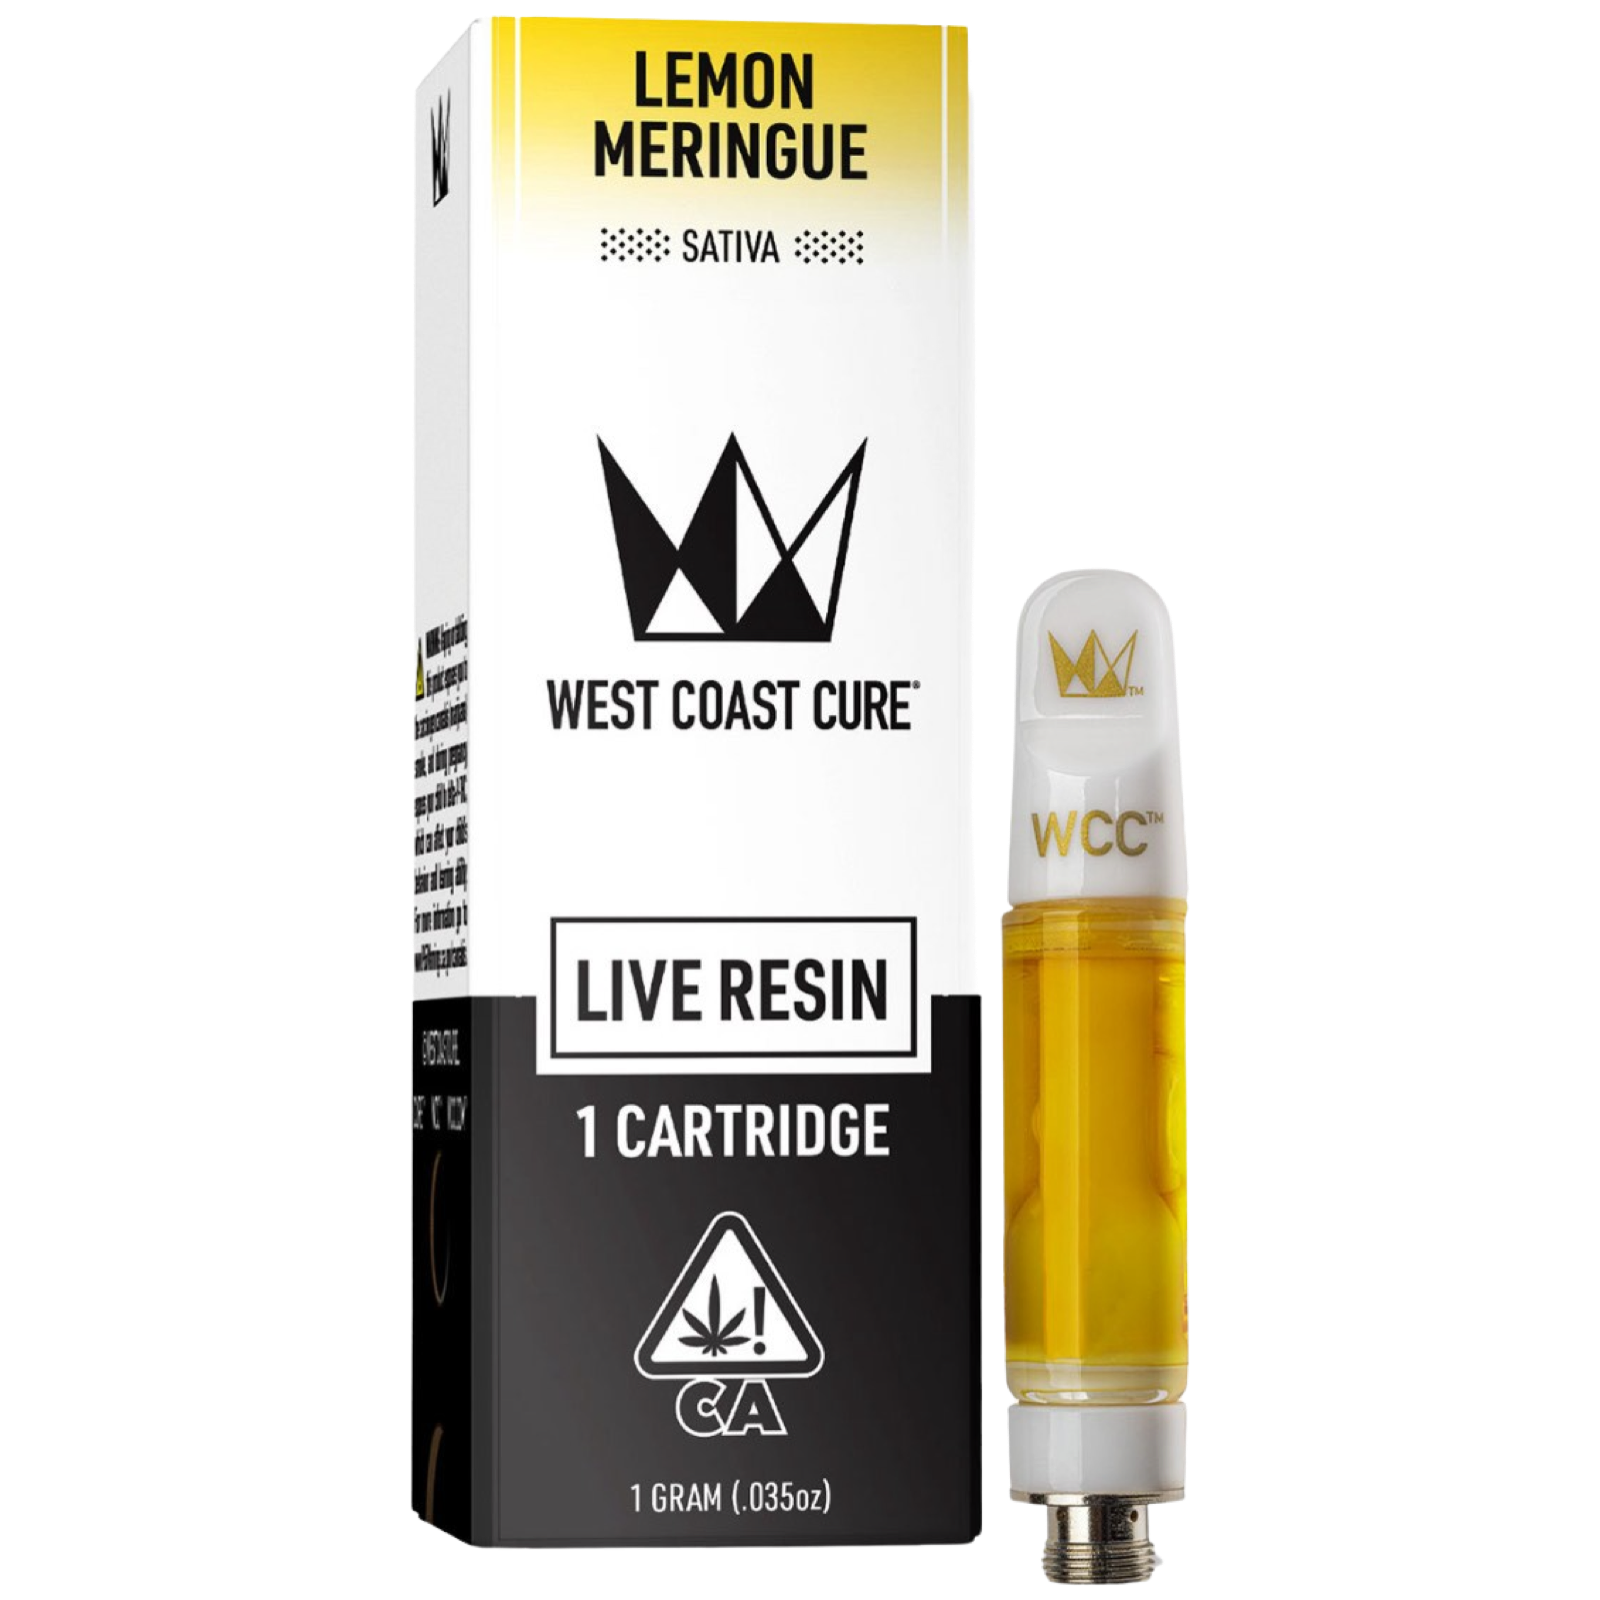 Lemon Meringue | West Coast Cure Live Resin Cartridge | 1G | Sativa